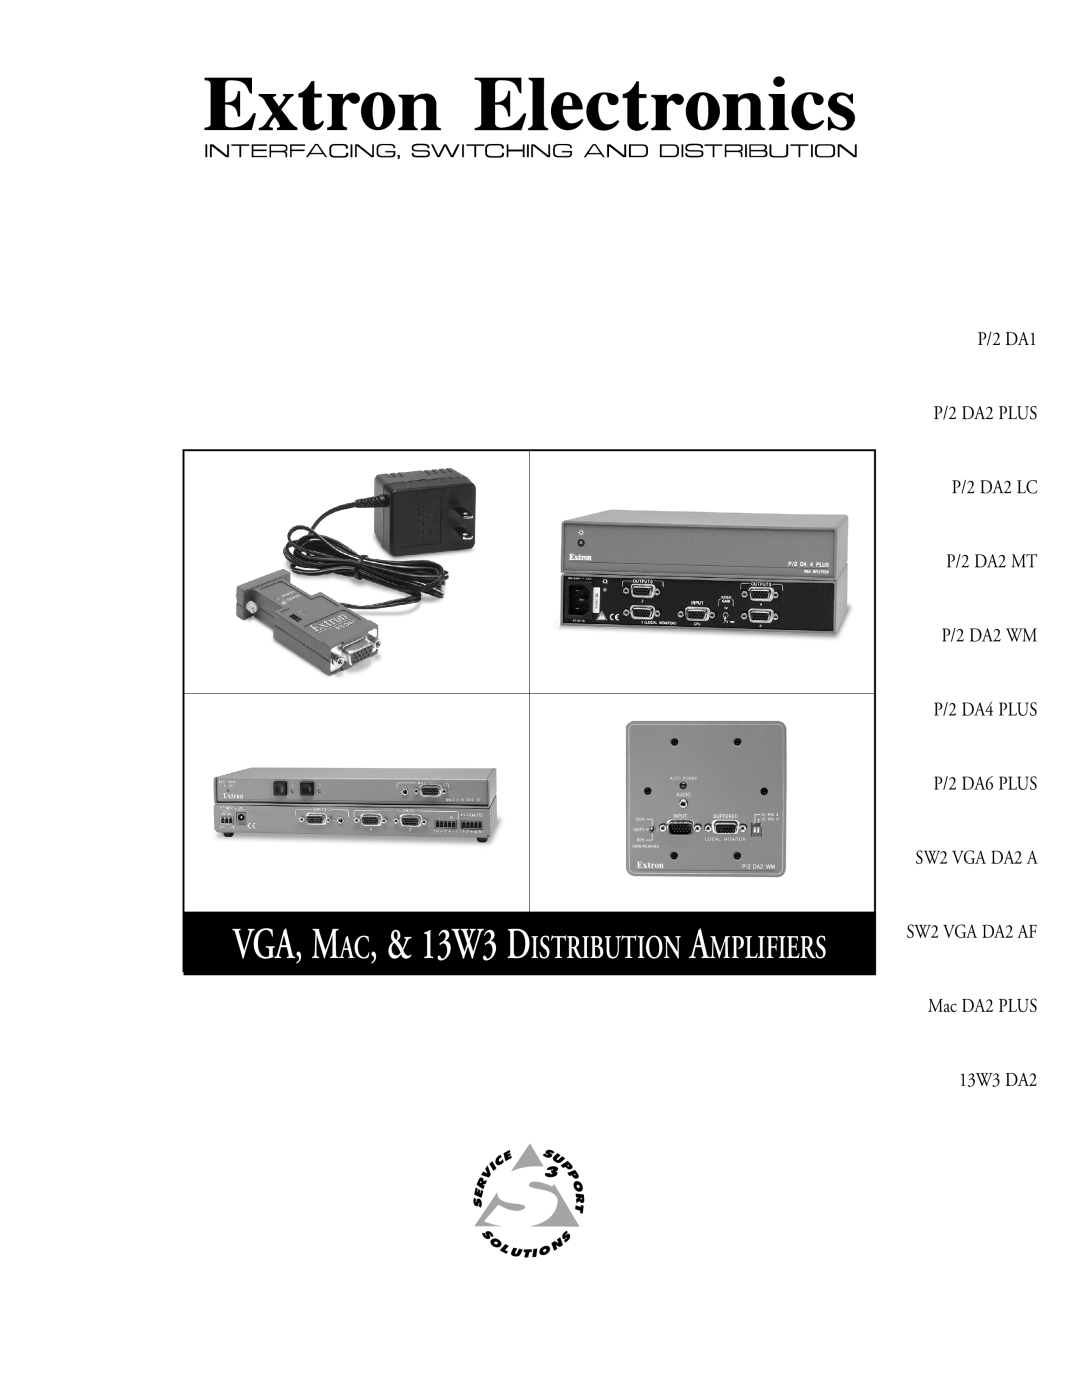 Extron electronic manual VGA, MAC, & 13W3 DISTRIBUTION AMPLIFIERS, P/2 DA1 P/2 DA2 PLUS P/2 DA2 LC P/2 DA2 MT, 13W3 DA2 